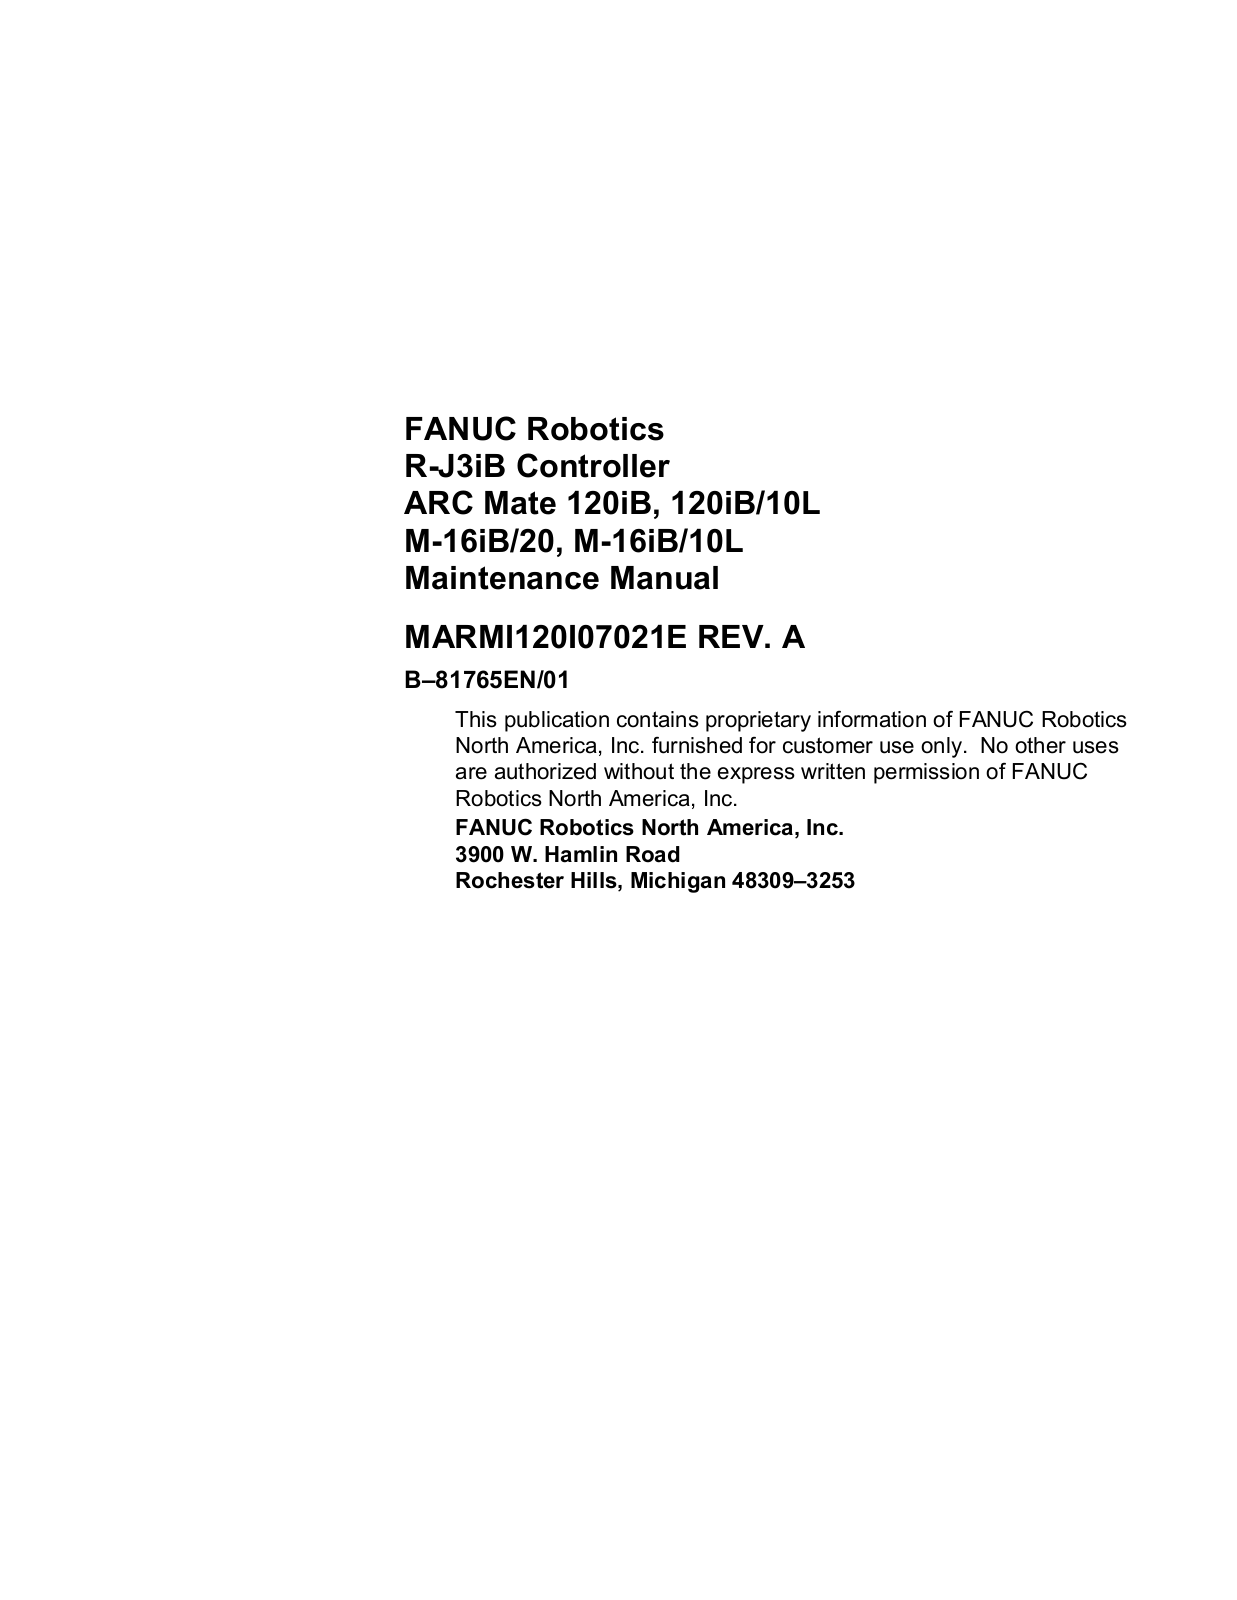 fanuc RJ3iB Maintenance Manual